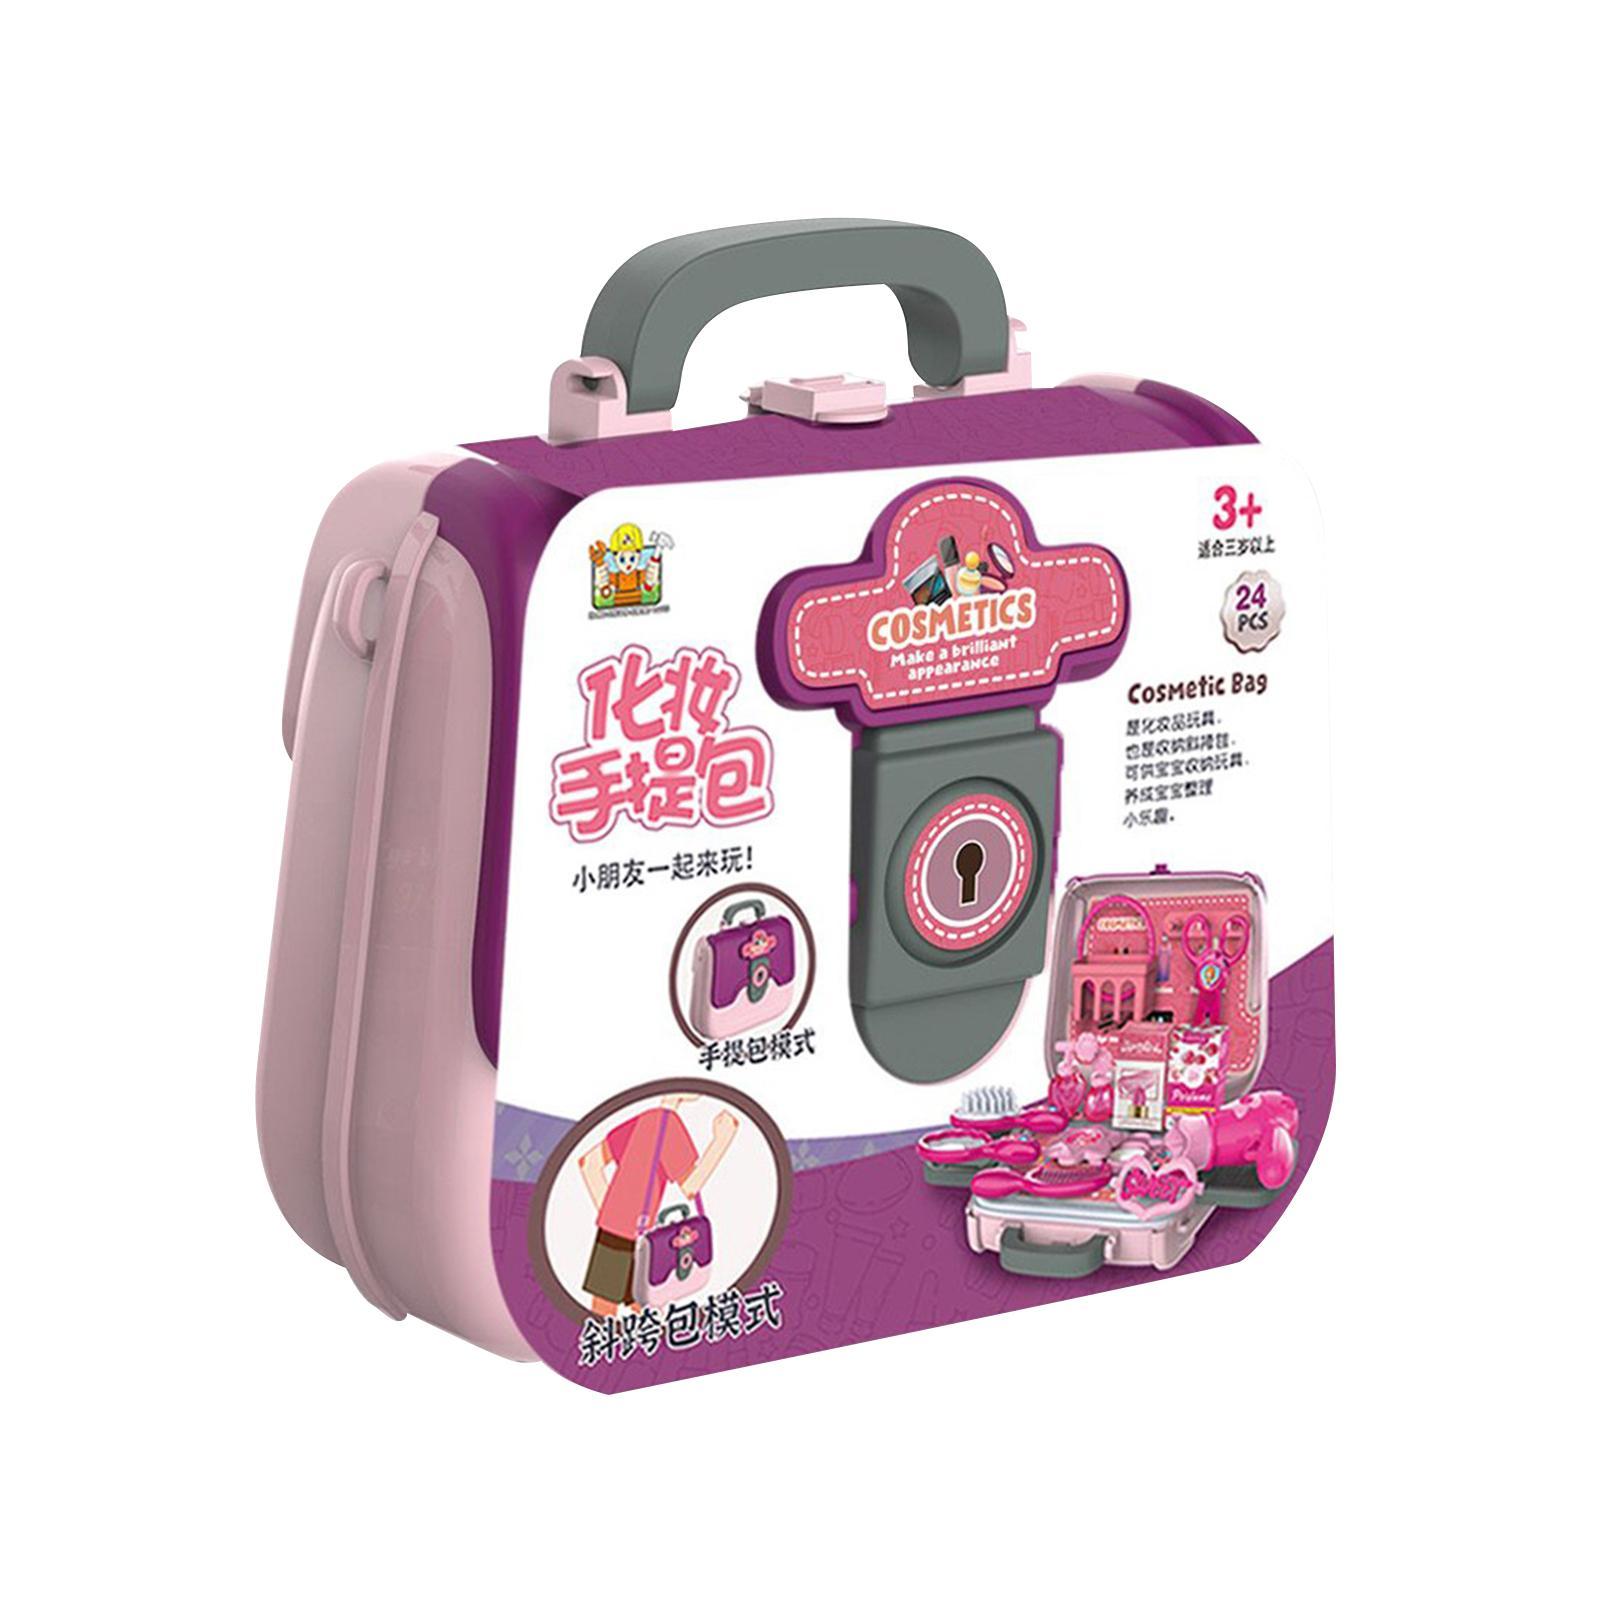 Simulation Handbag Play Role Game Pretend Play Toy for Girls Children Boy